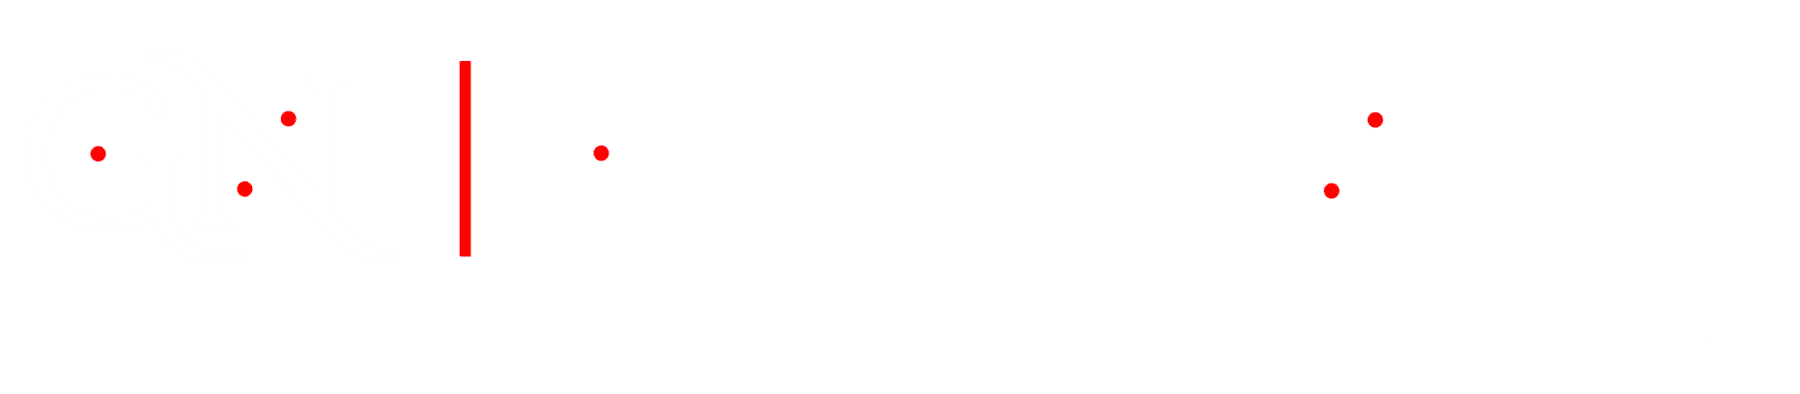 Growth Net Digital Logo White